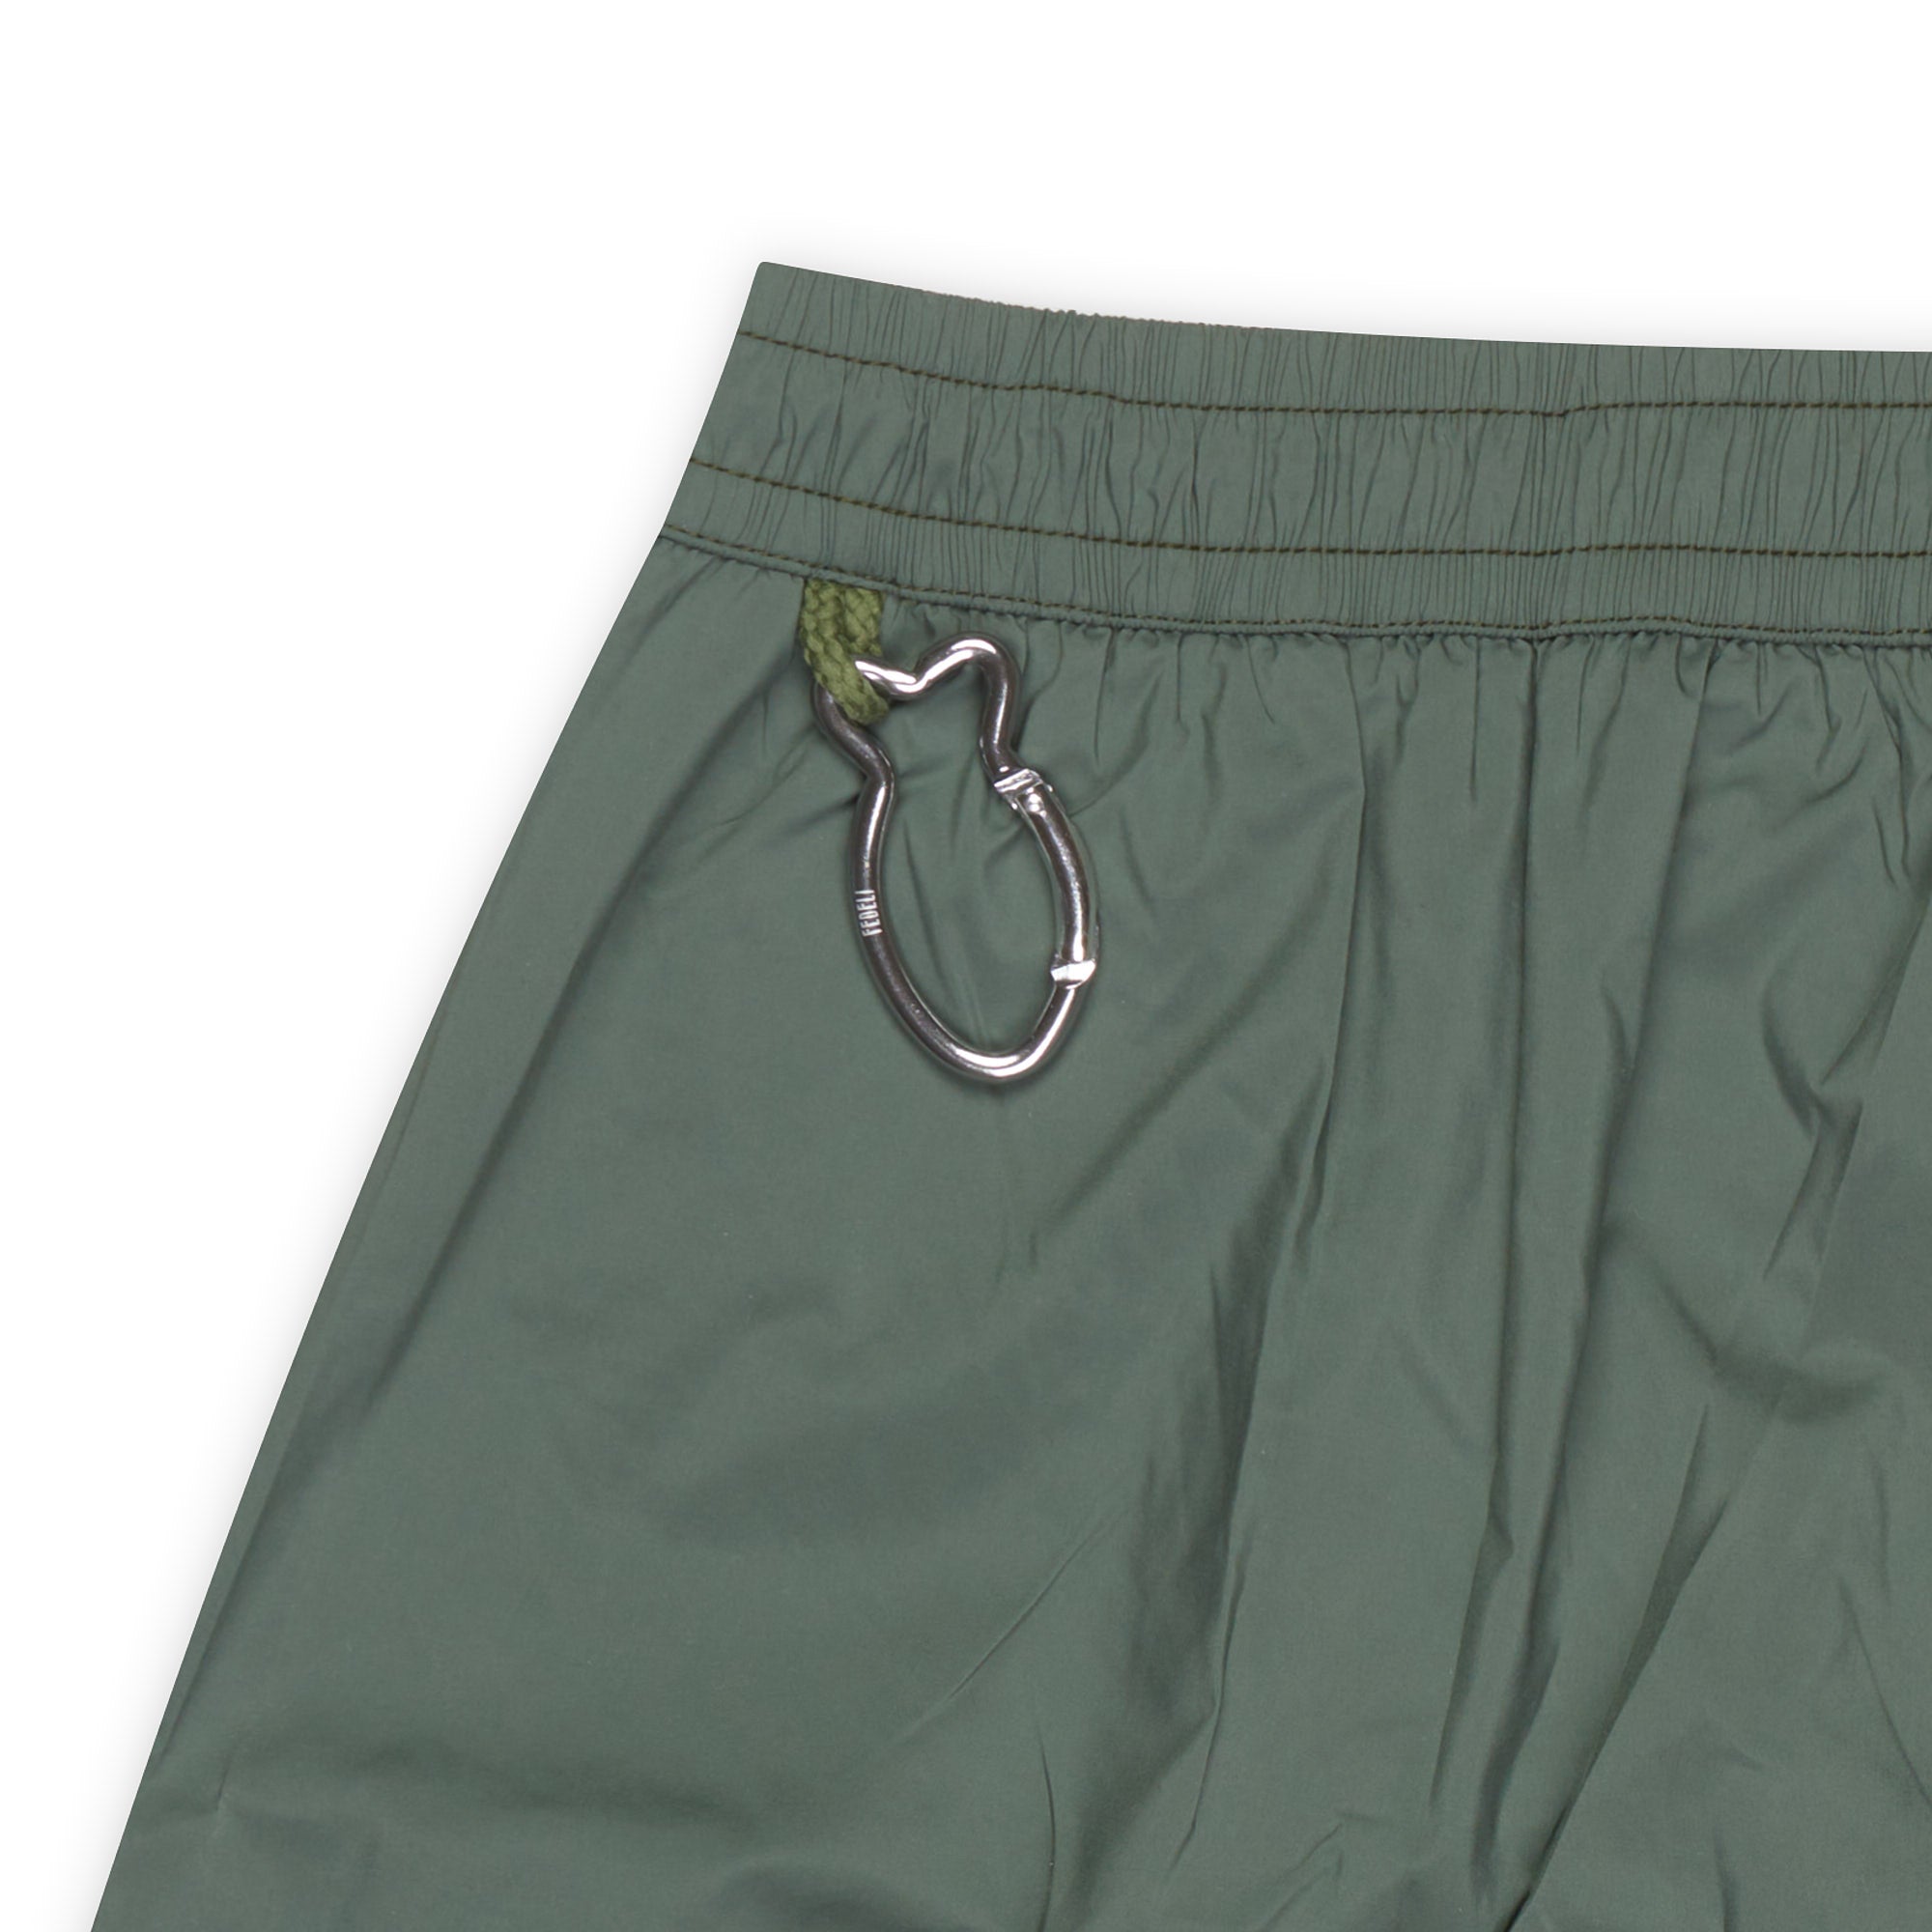 FEDELI Green Positano Airstop Swim Shorts Trunks NEW Size 3XL FEDELI